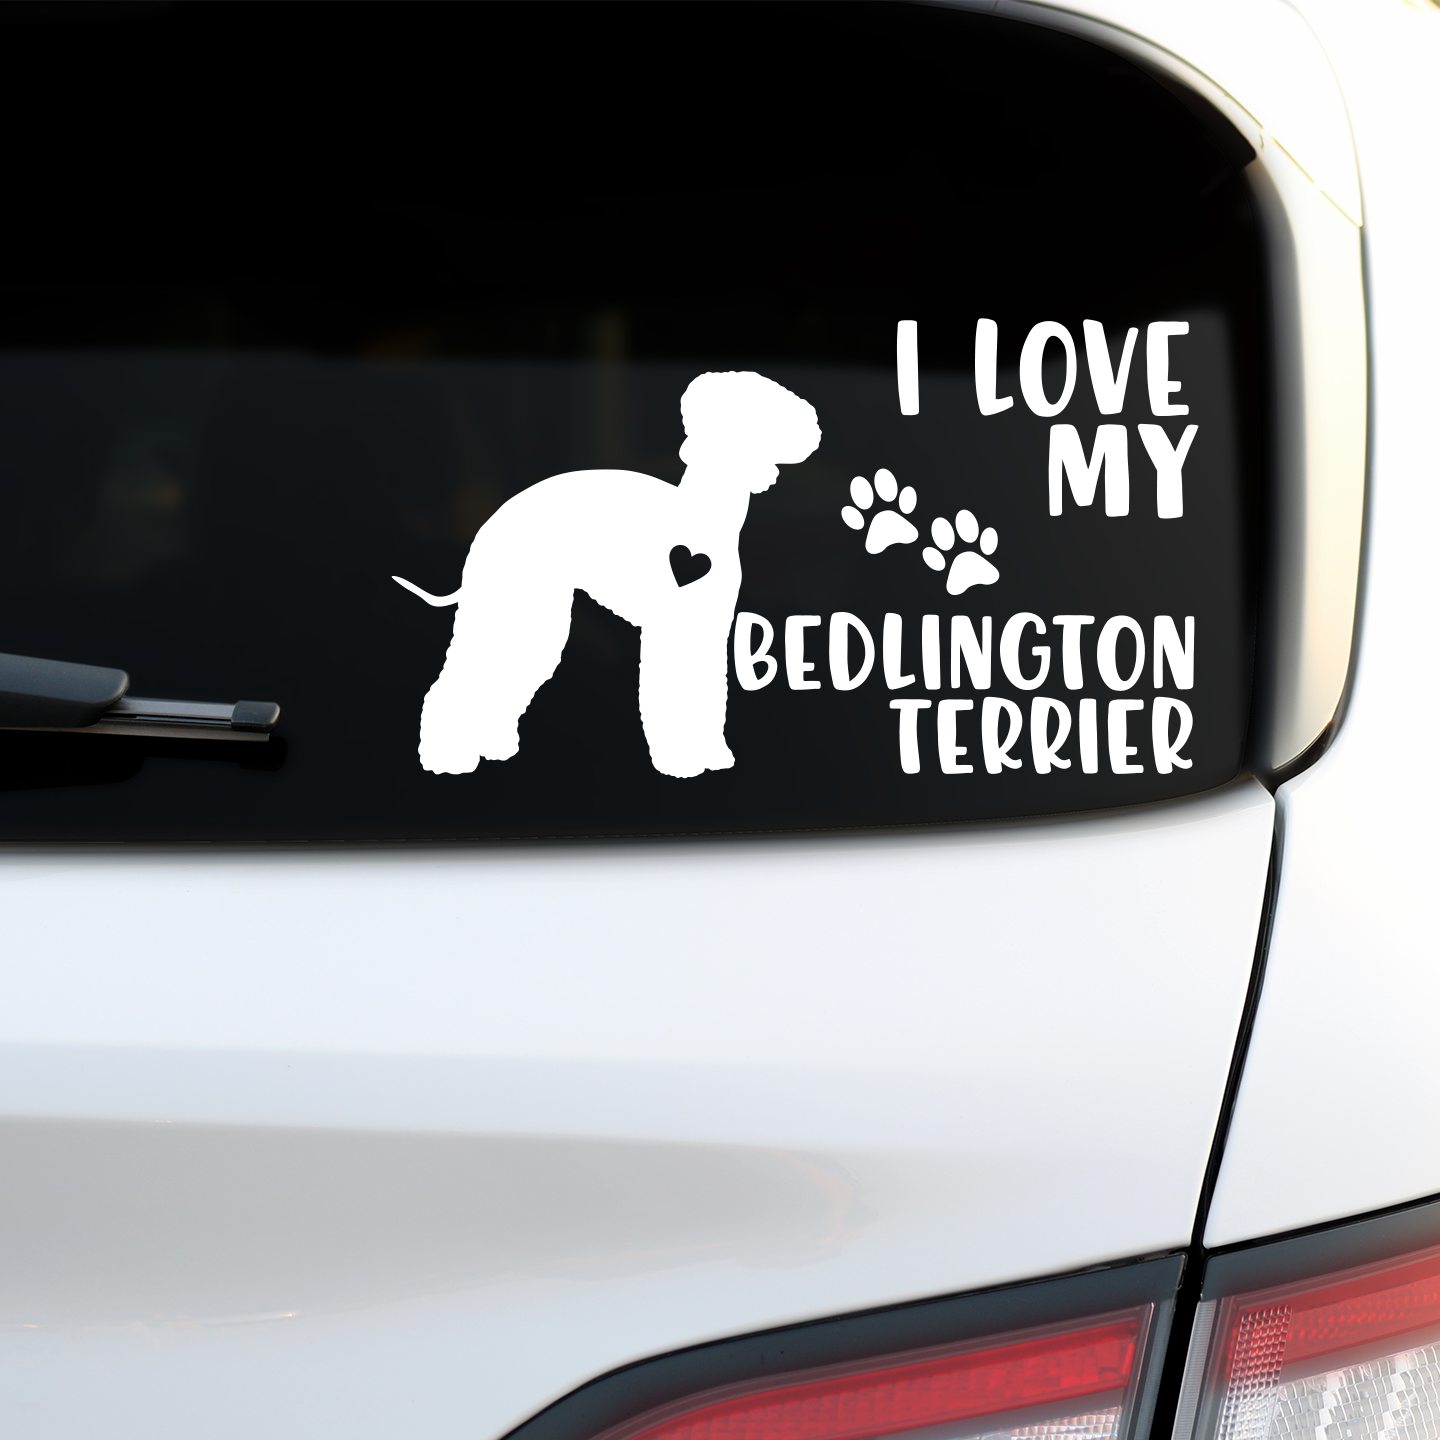 I Love My Bedlington Terrier Sticker